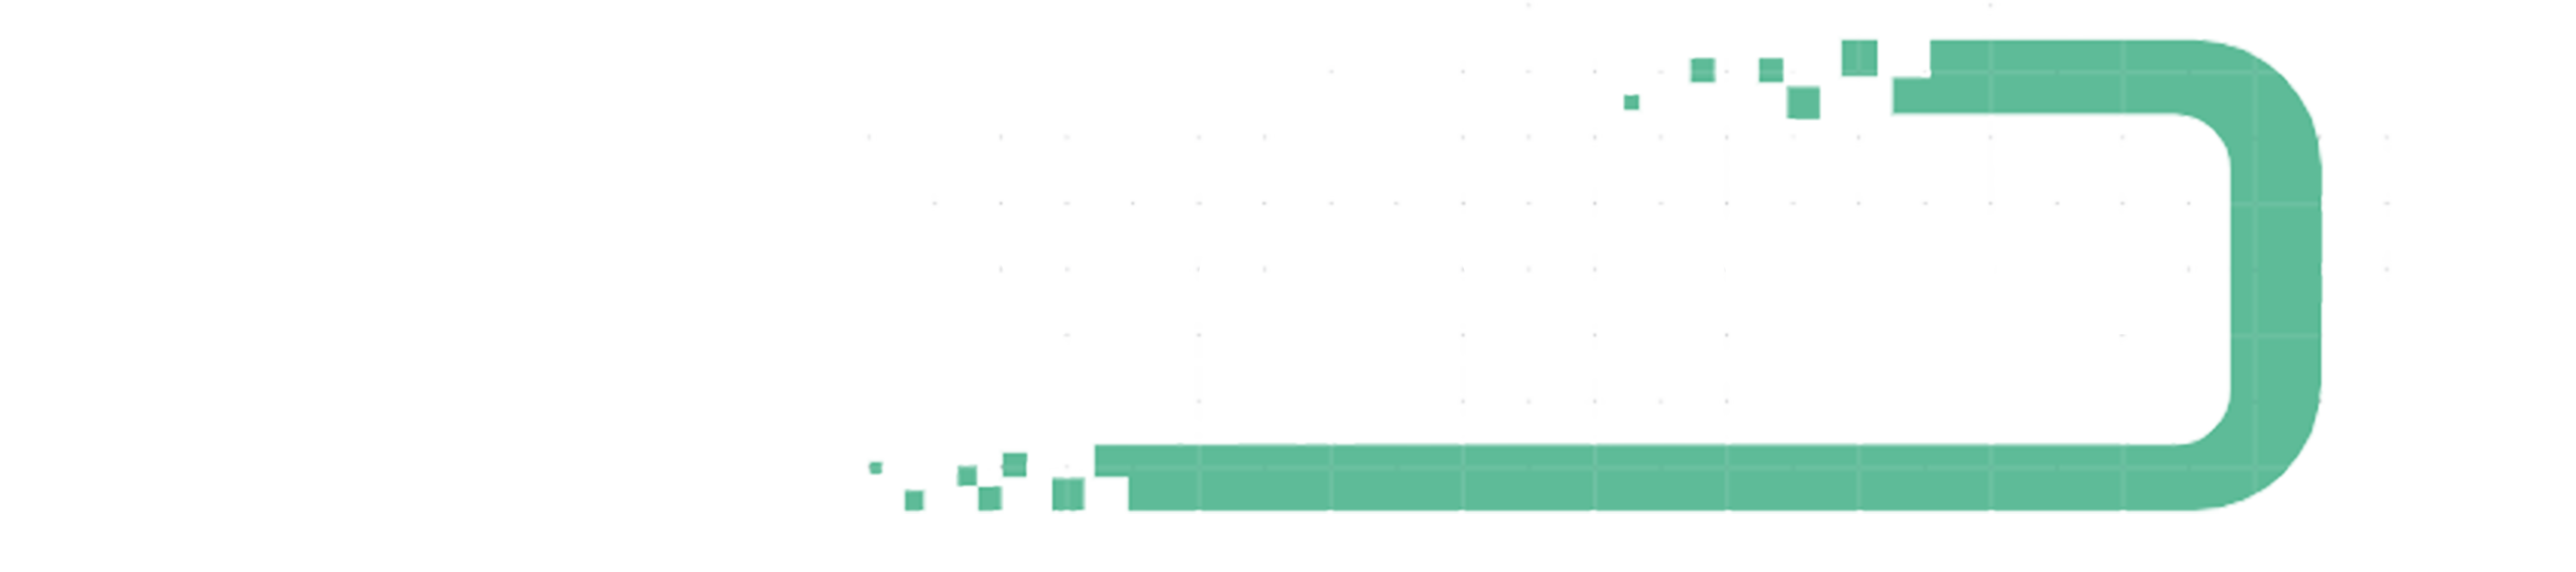 total-innovation-iot.com